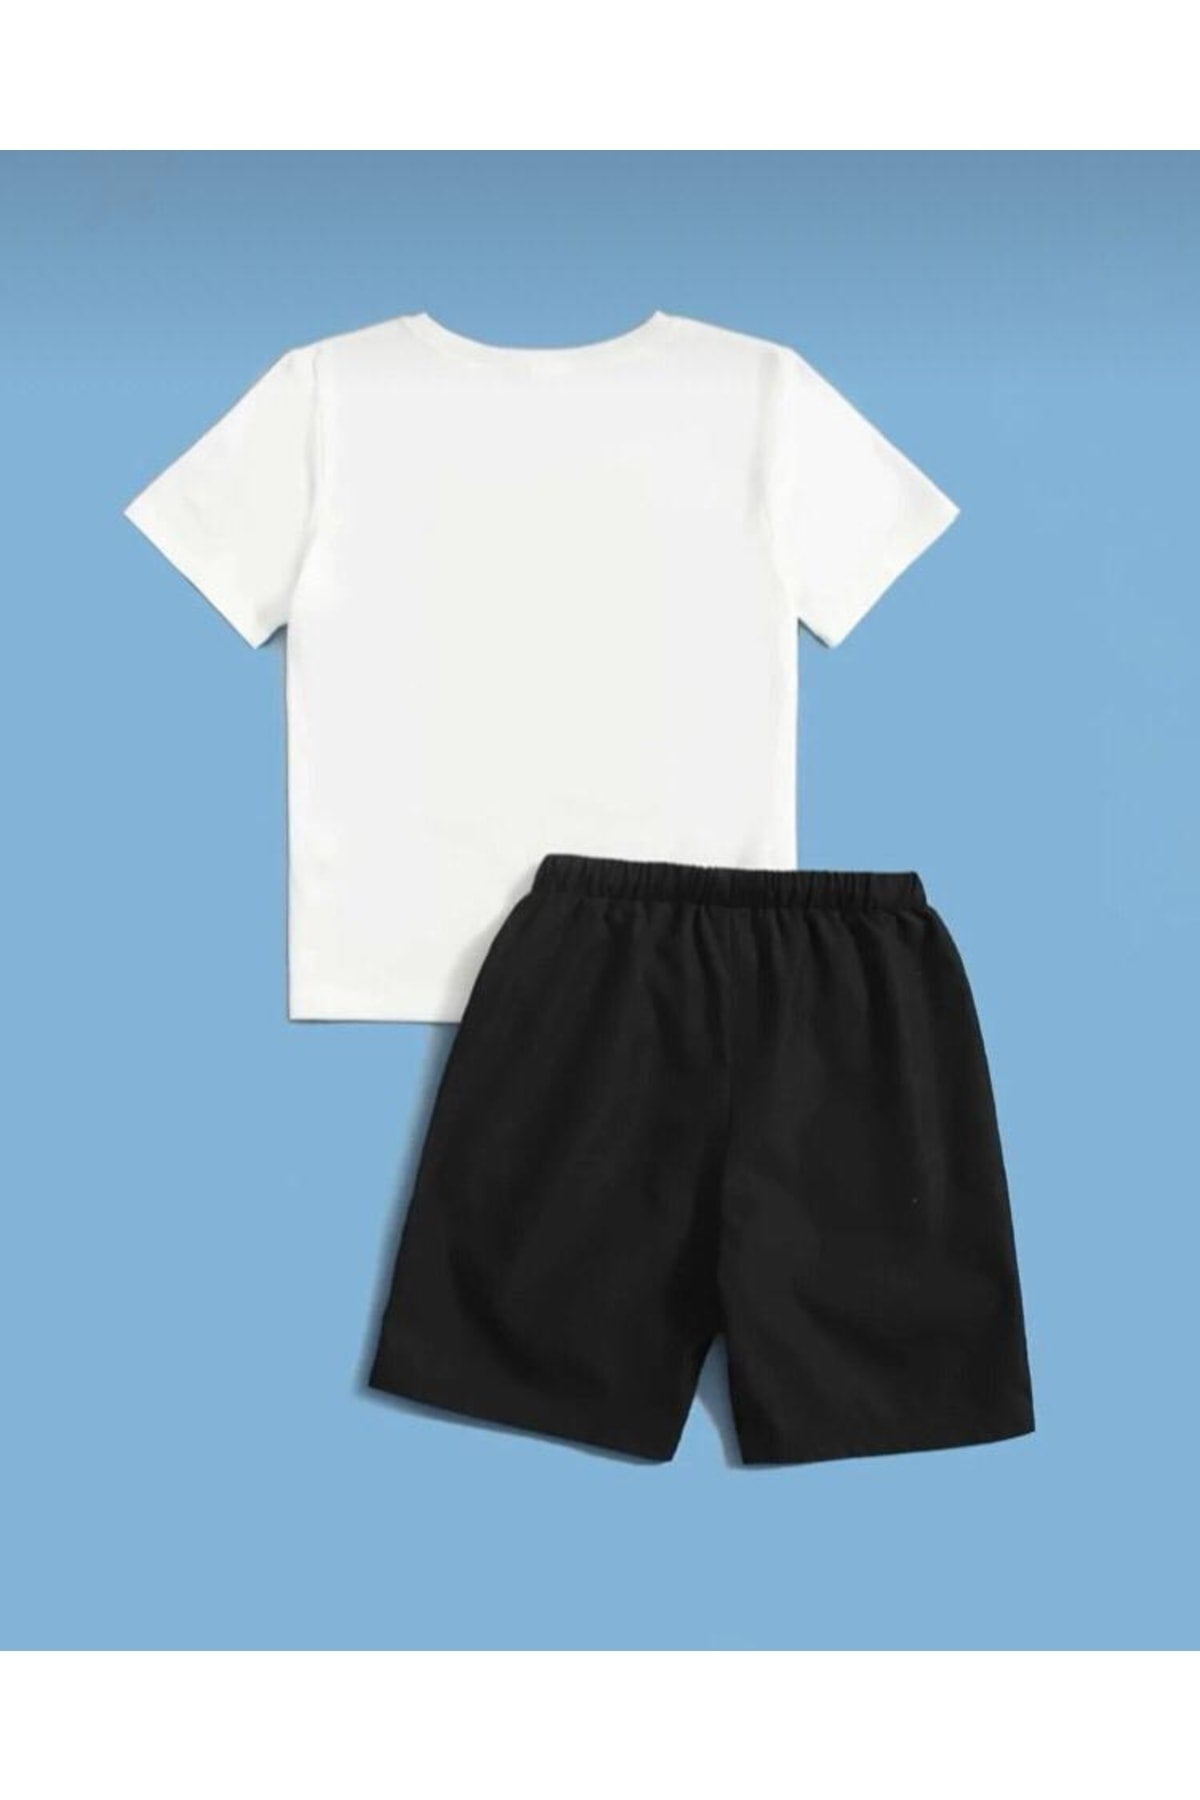 Unisex Printed Kids Shorts Set